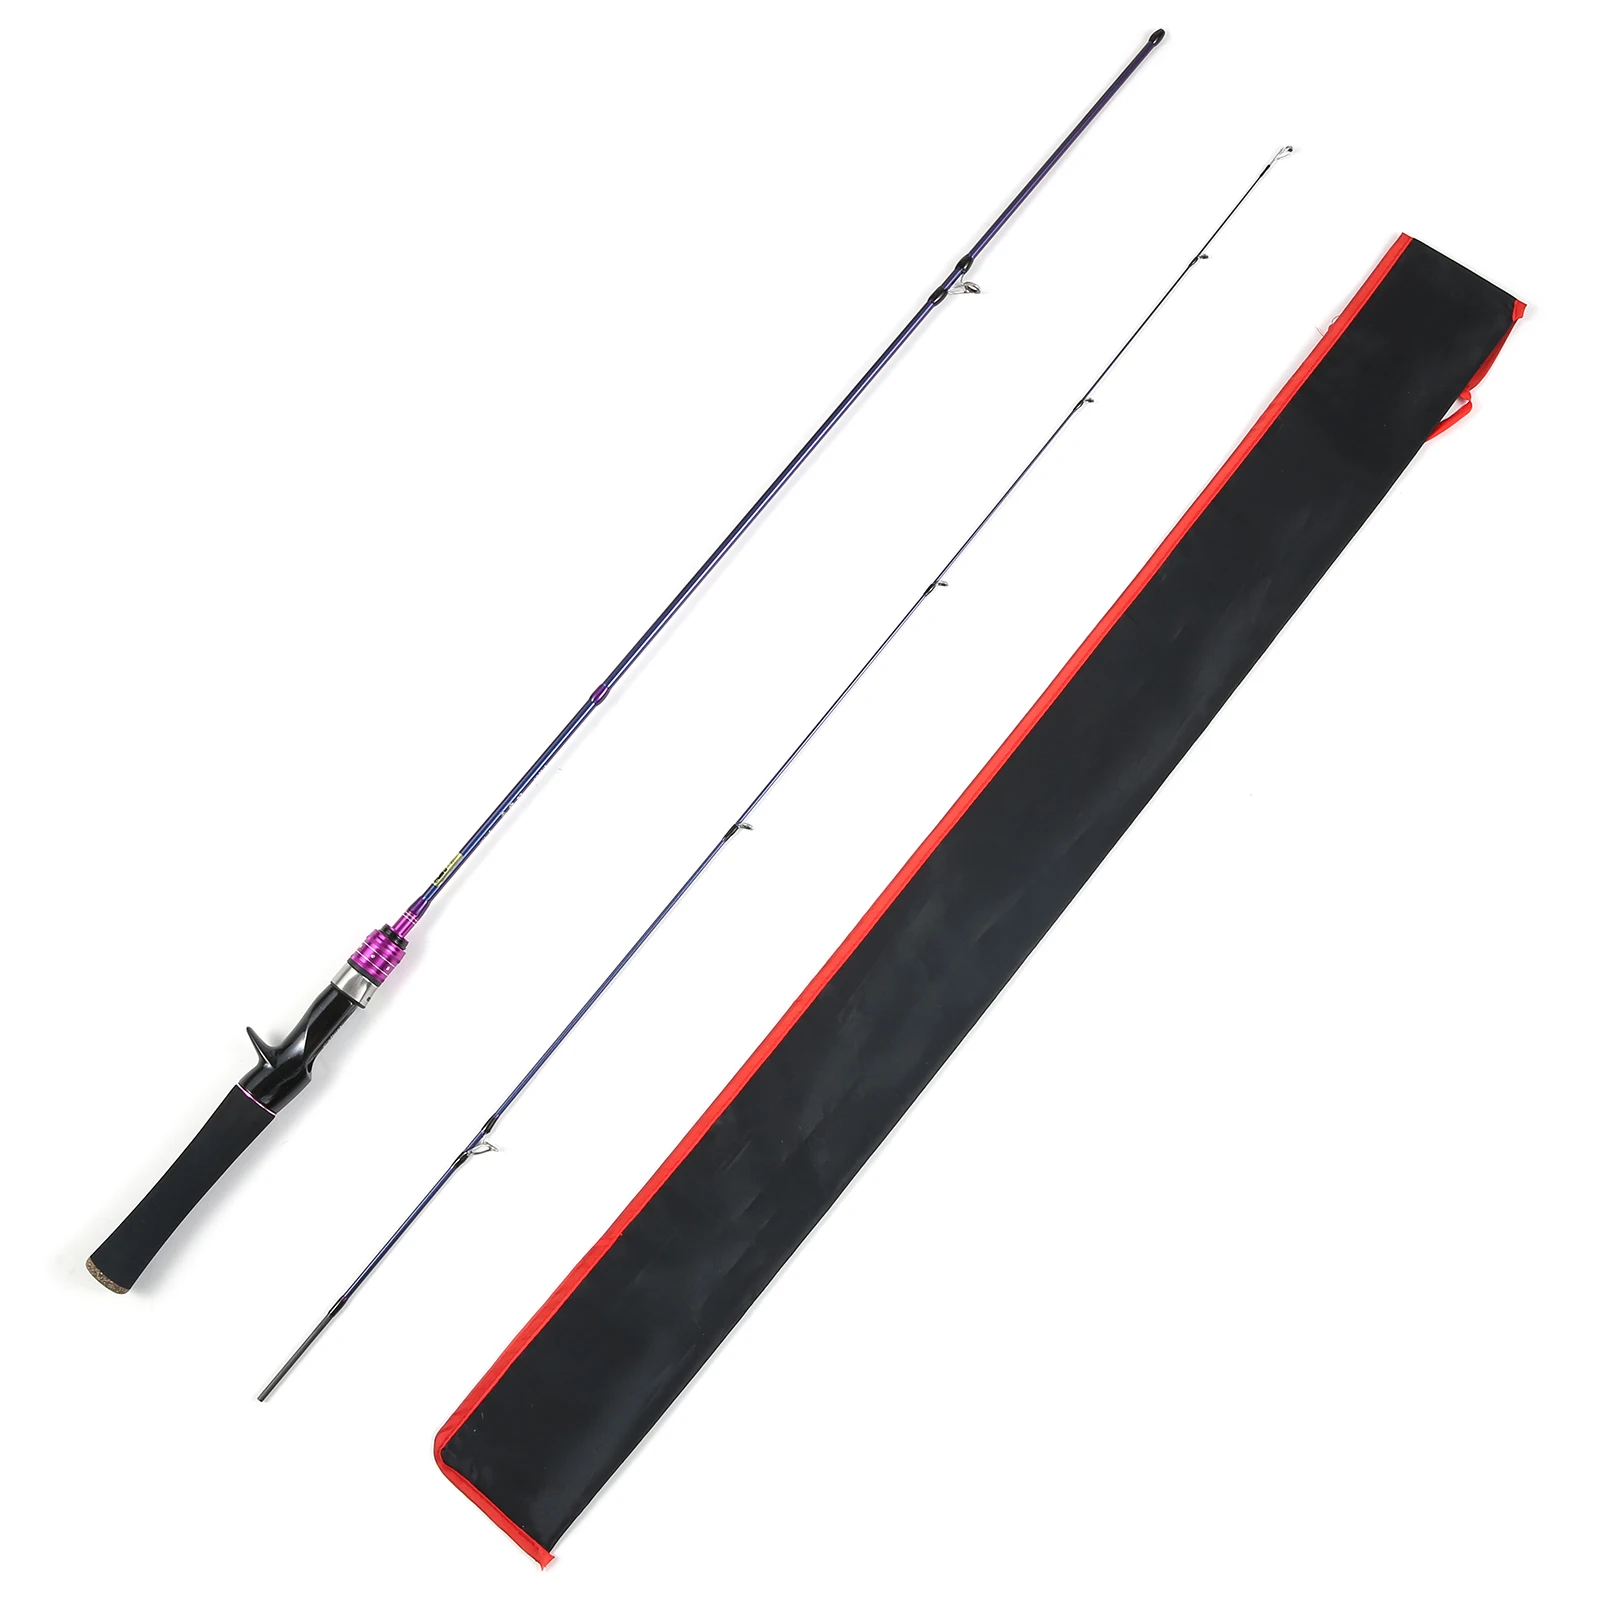 

1.68m / 1.83m Lightweight Carbon Fiber Casting/Spinning Fishing Rod Lure Fishing Rod Outdoor Equipment Fishing Pole